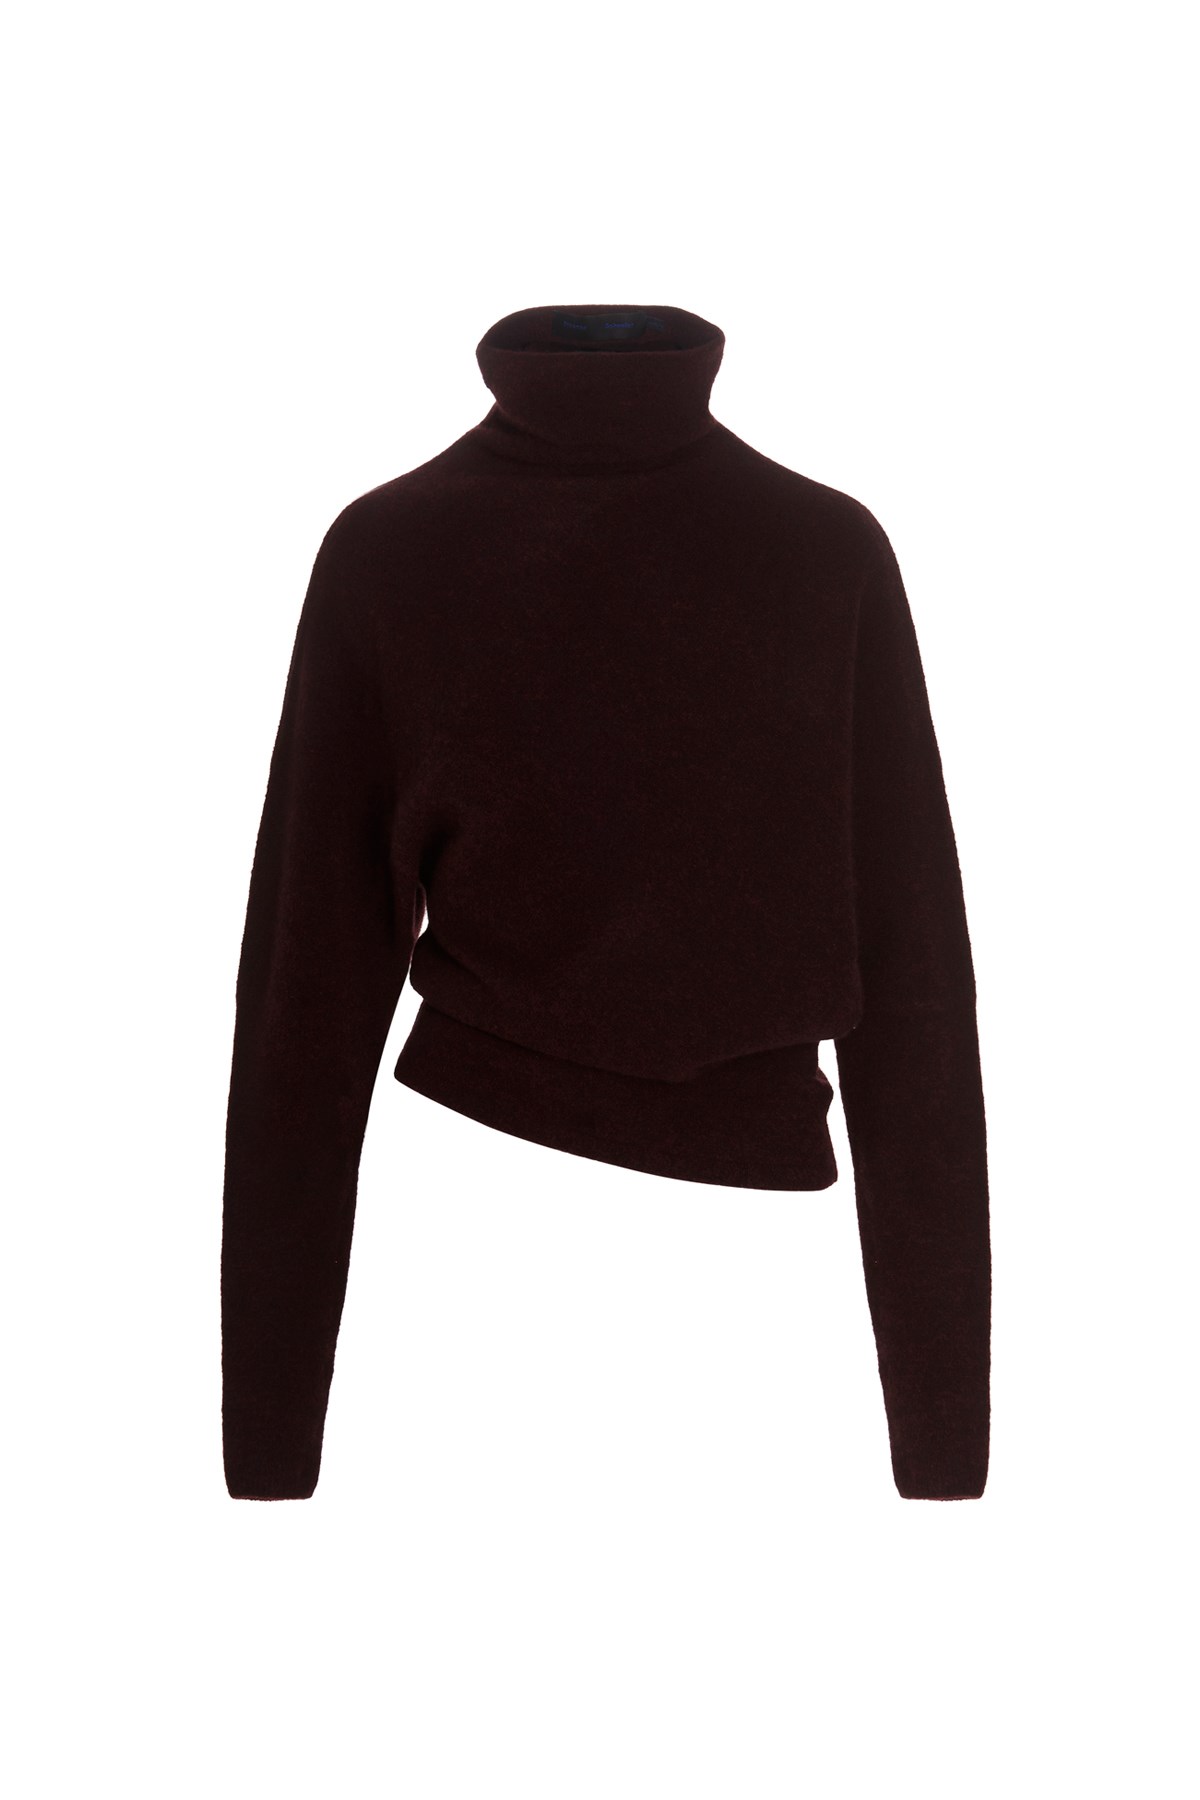 PROENZA SCHOULER Asymmetrical Hemline Sweater